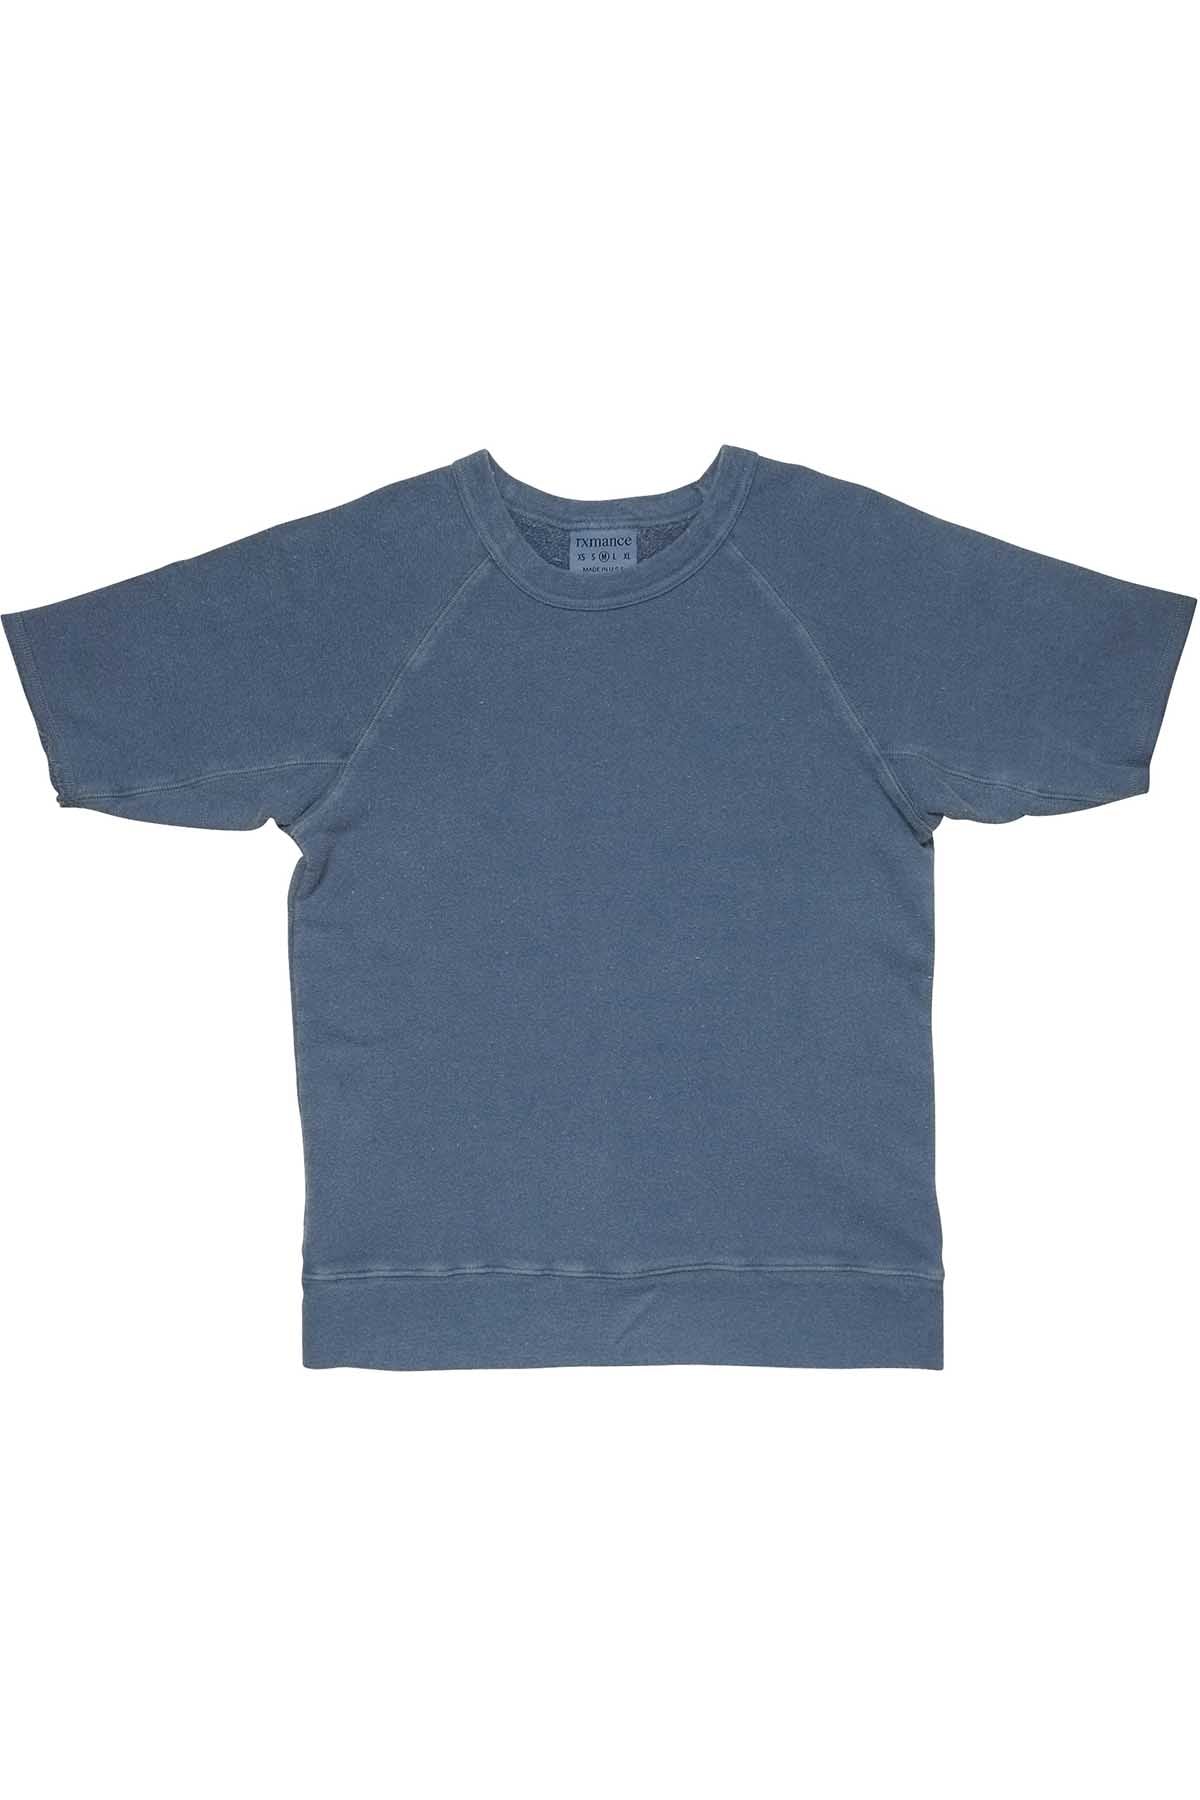 Rxmance Unisex Sky Blue Short Sleeve Sweatshirt